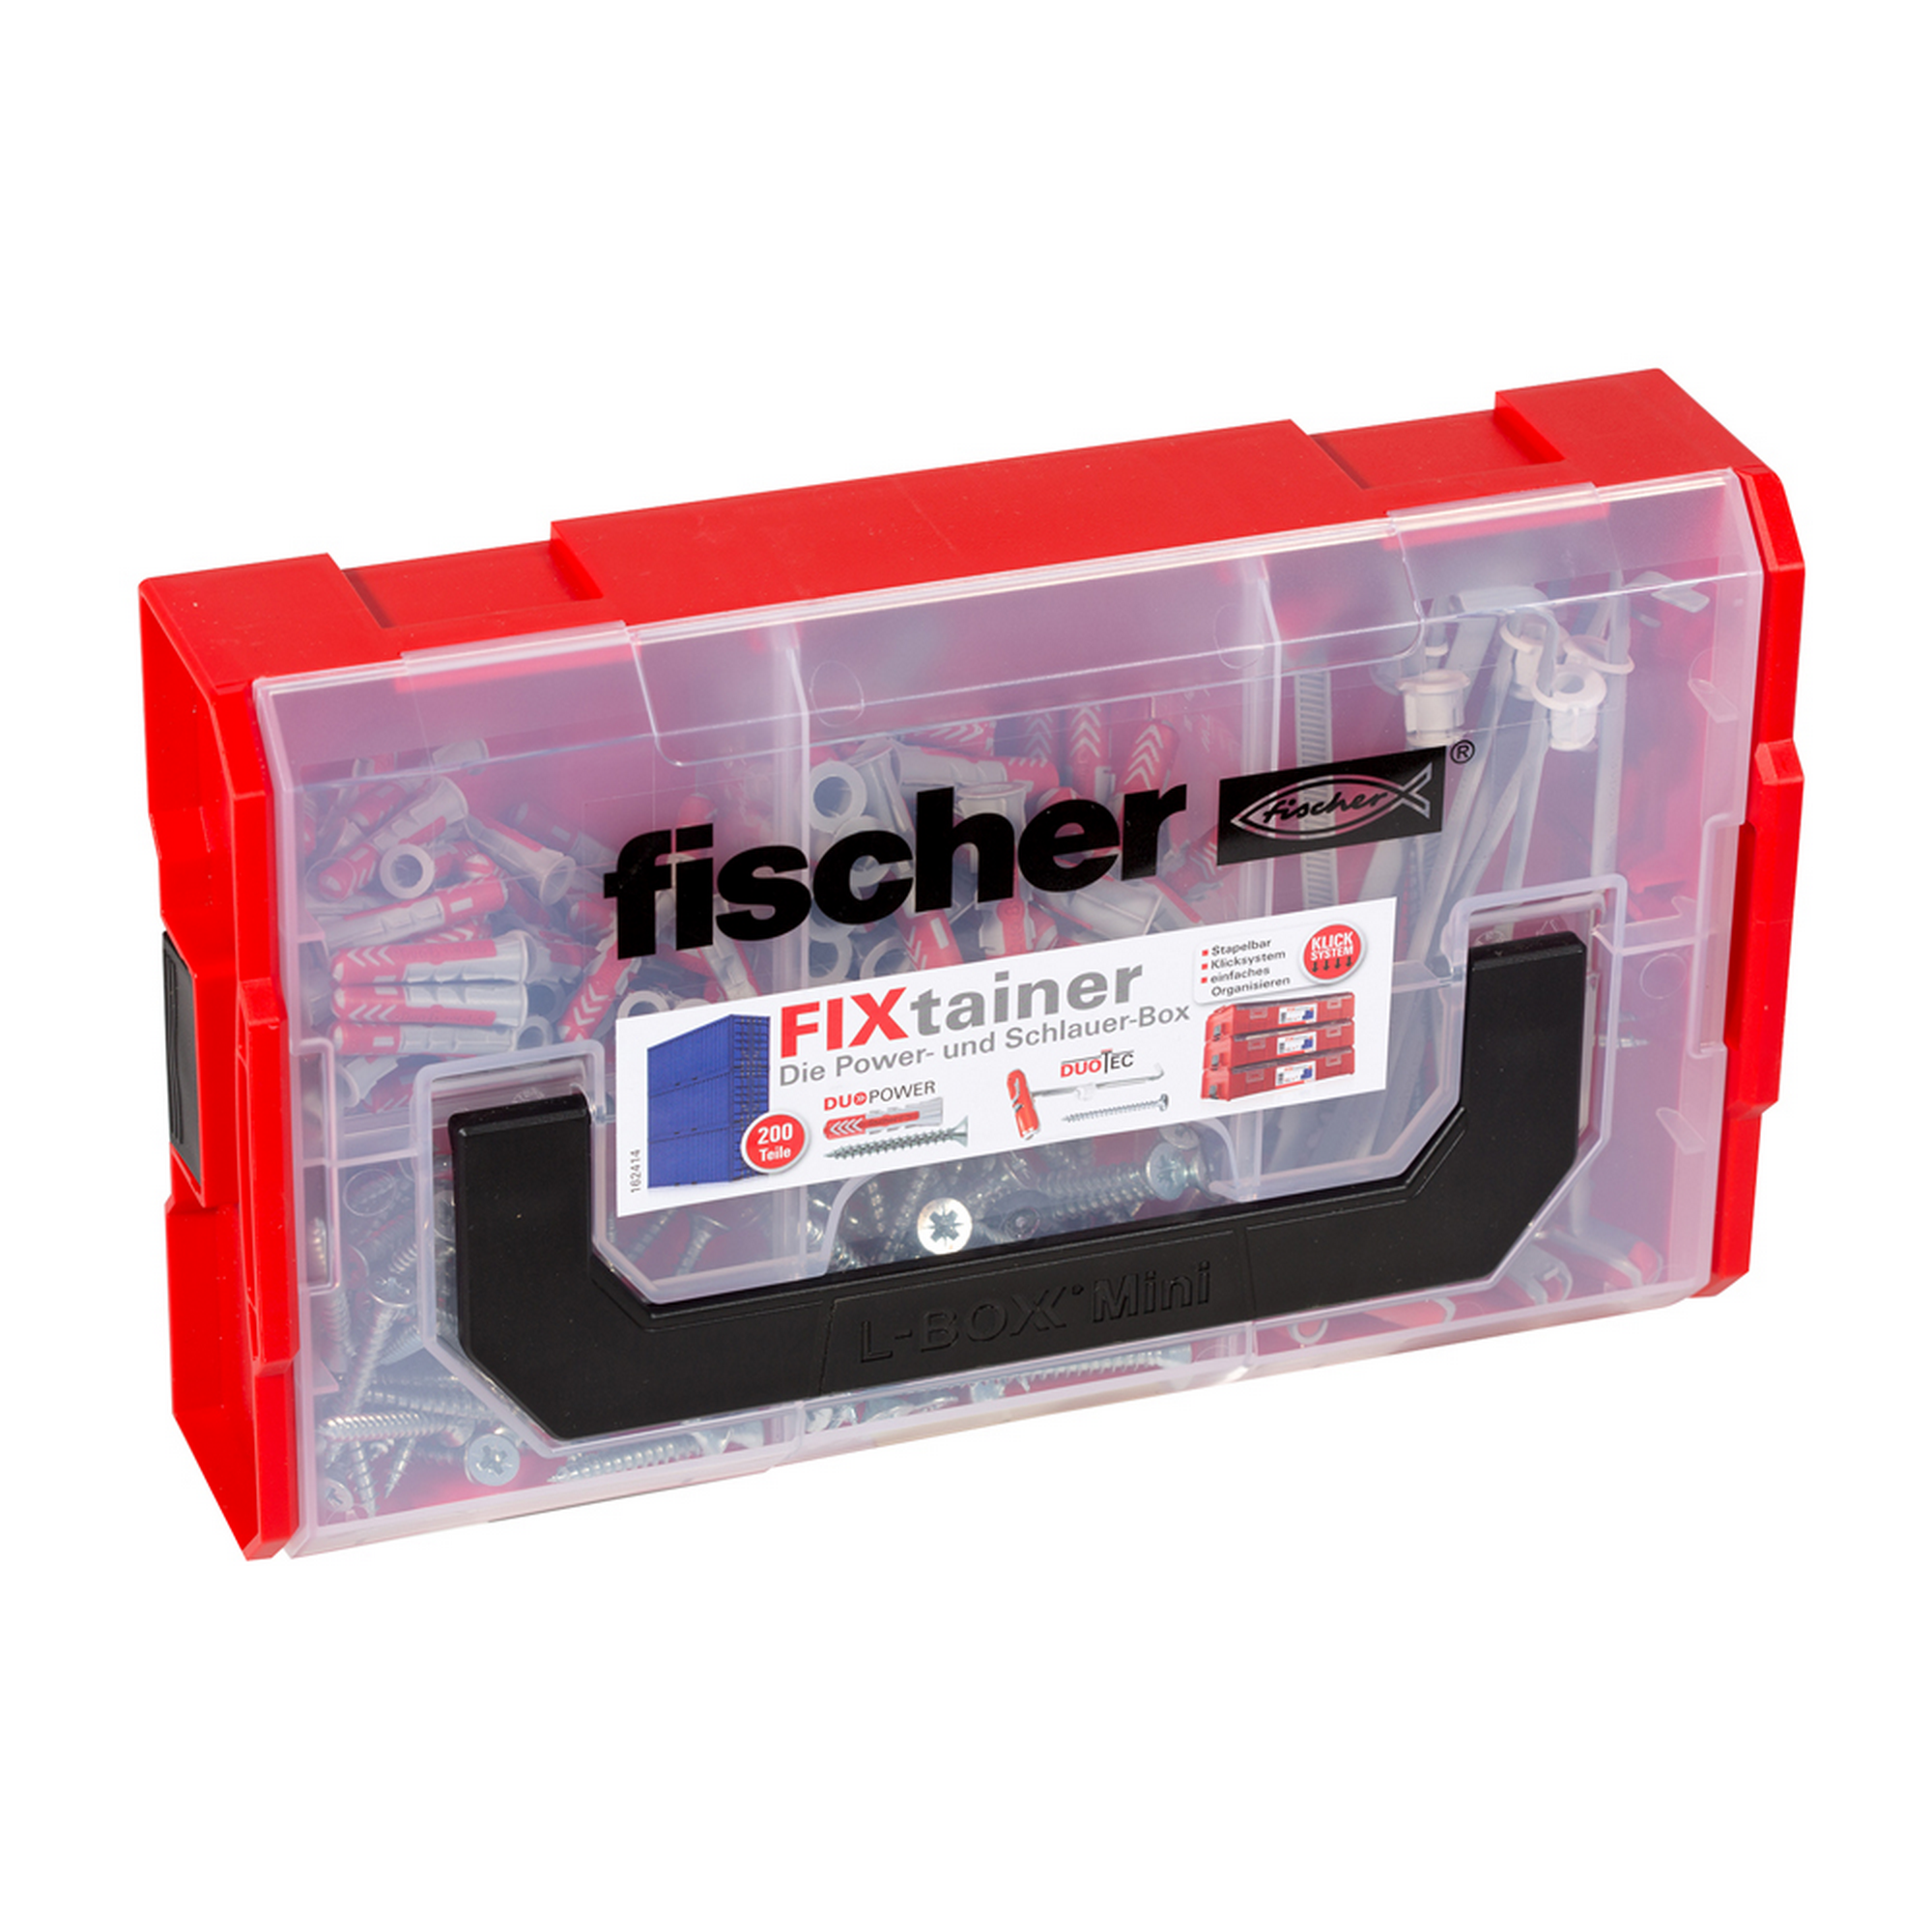 Dübel- und Schrauben-Box 'FIXtainer - Duopower/Duotec' 200-teilig + product picture